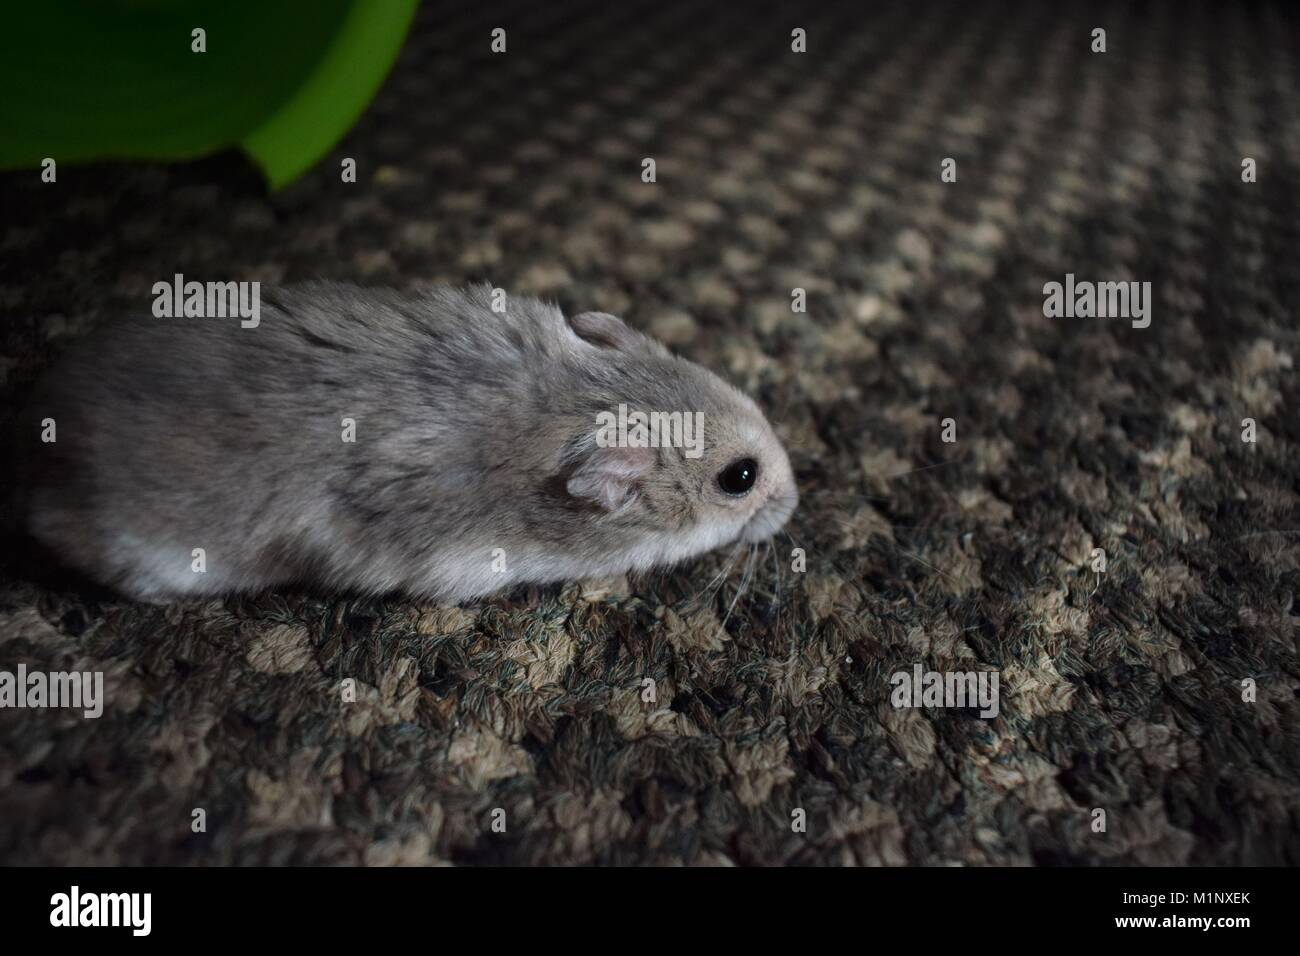 hamster discovering carpet Stock Photo